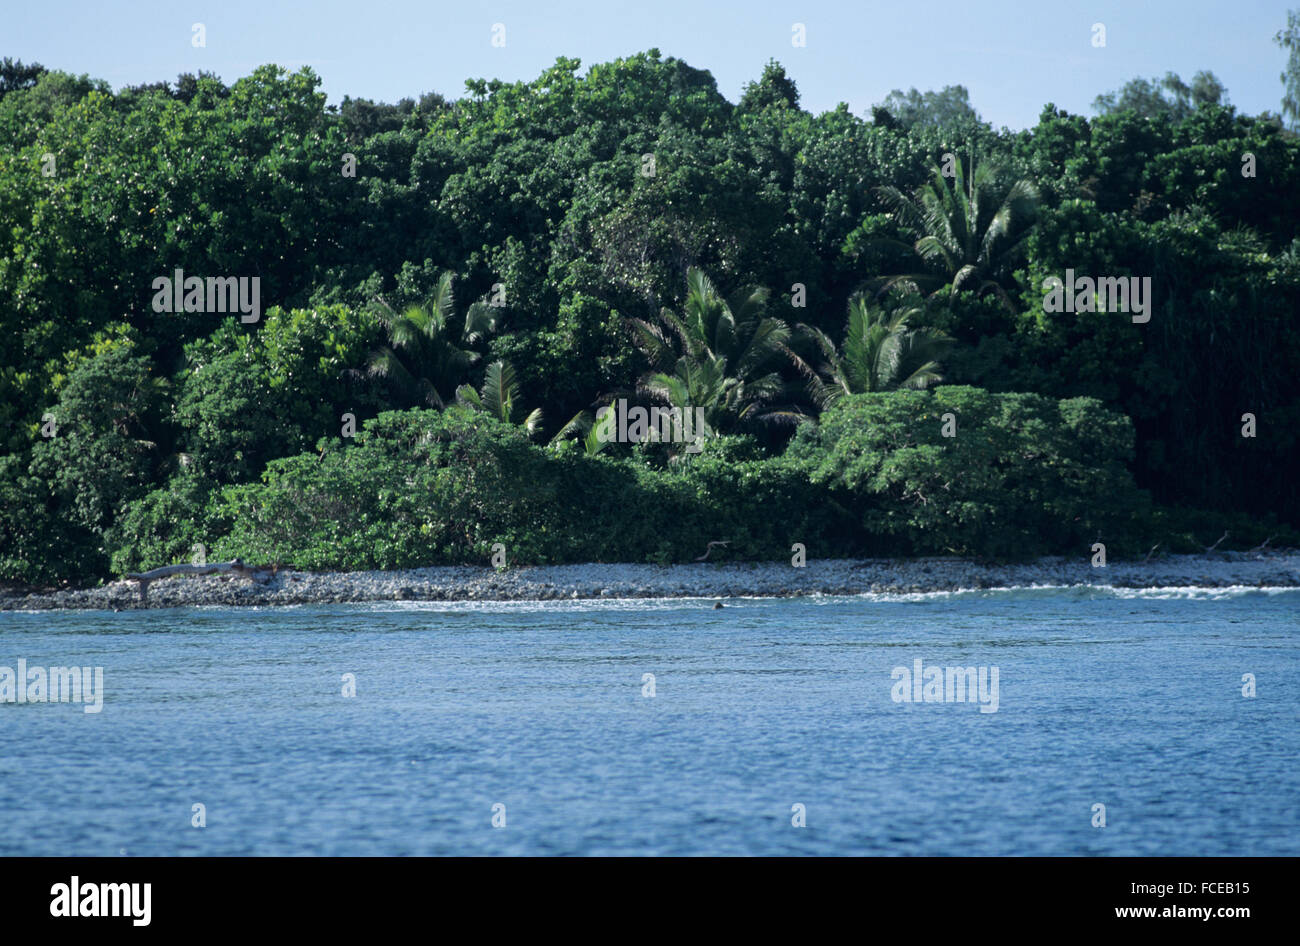 Ocean and island views of Palau Islands Stock Photo